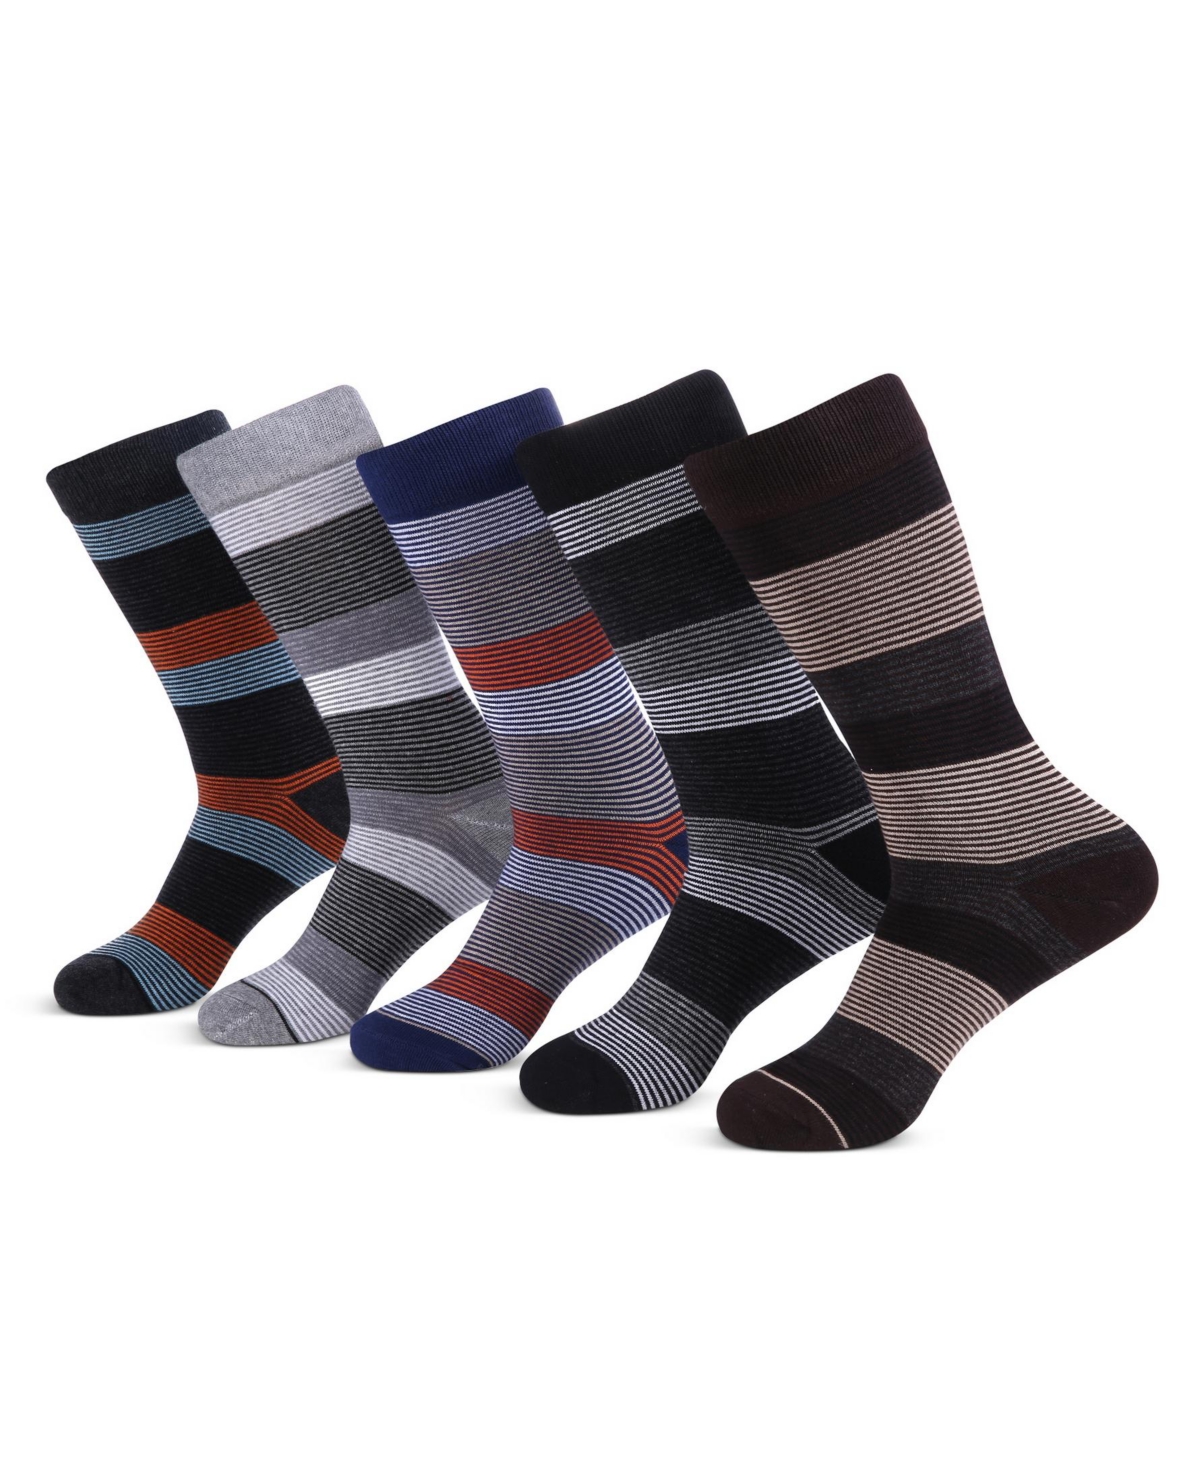 Men's Genteel Striped Crew Socks 5 Pack - Genteel striped